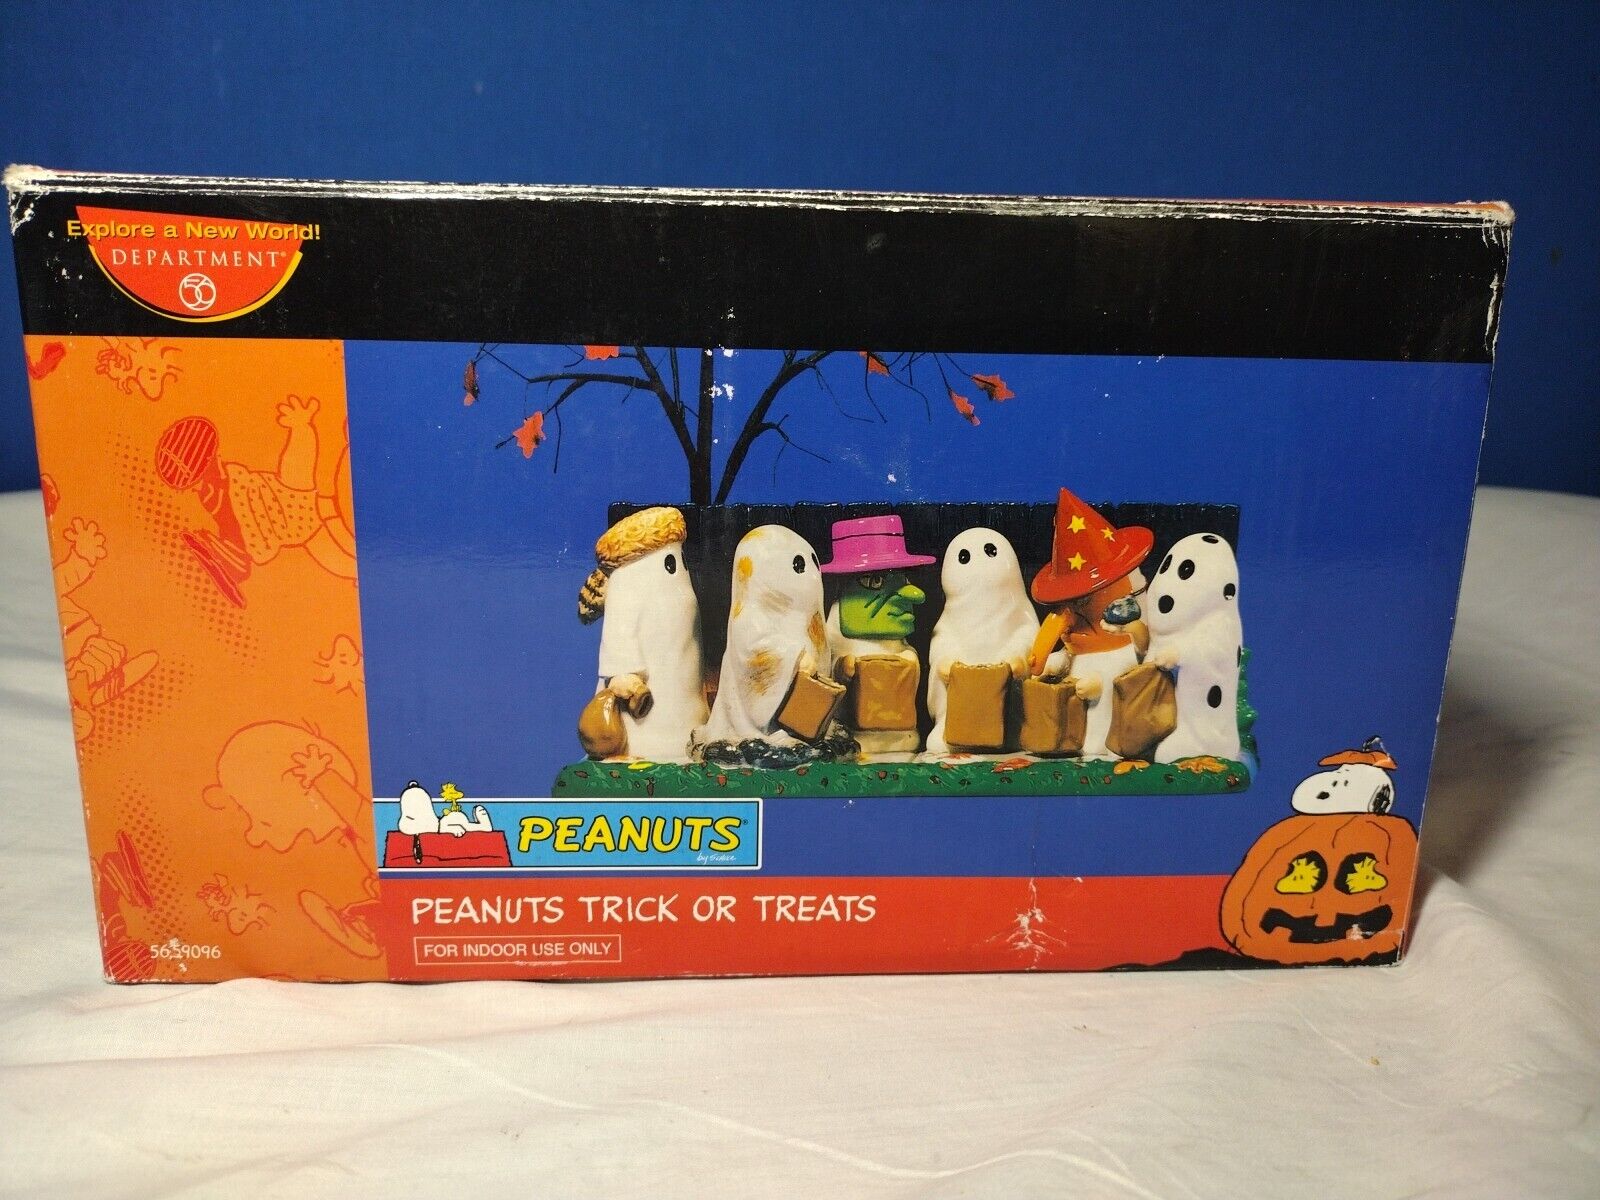 DEPARTMENT 56 Peanuts Halloween PEANUTS TRICK OR TREATS 5659096 - 